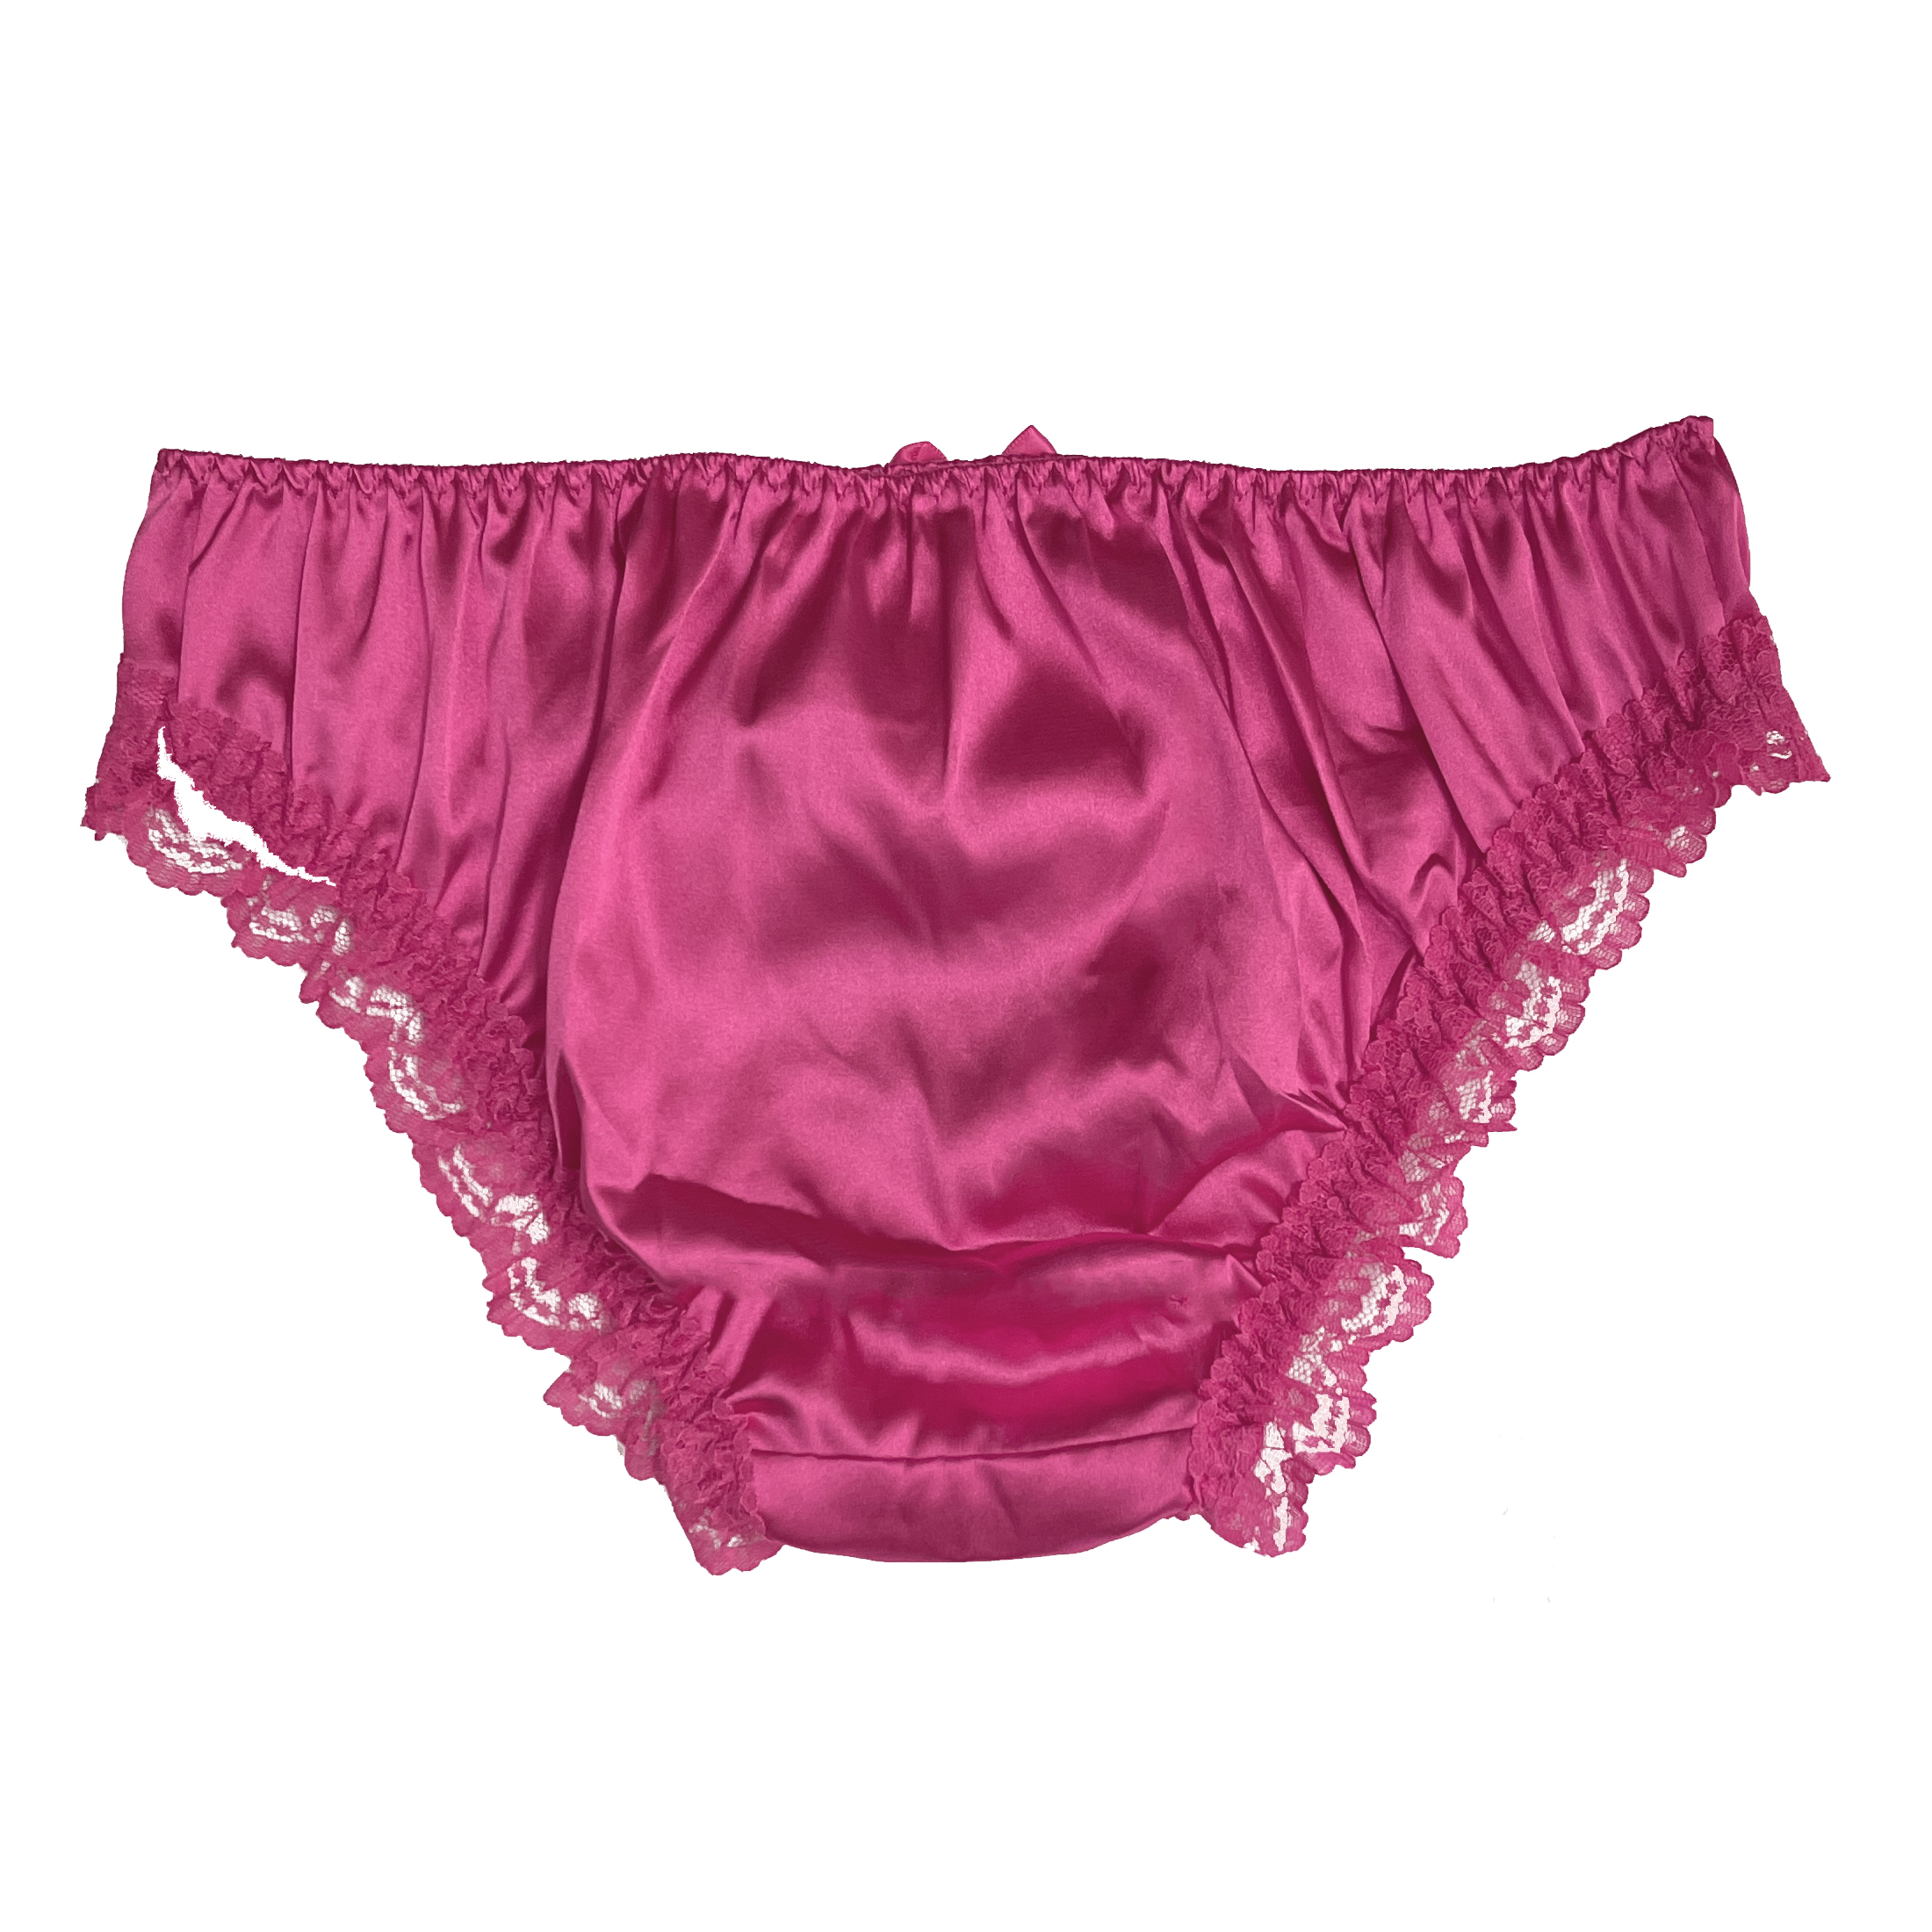 Satin Lace Frilly Sissy Cdtv Full Panties Knicker Briefs Underwear Size S Xxl Ebay 5300